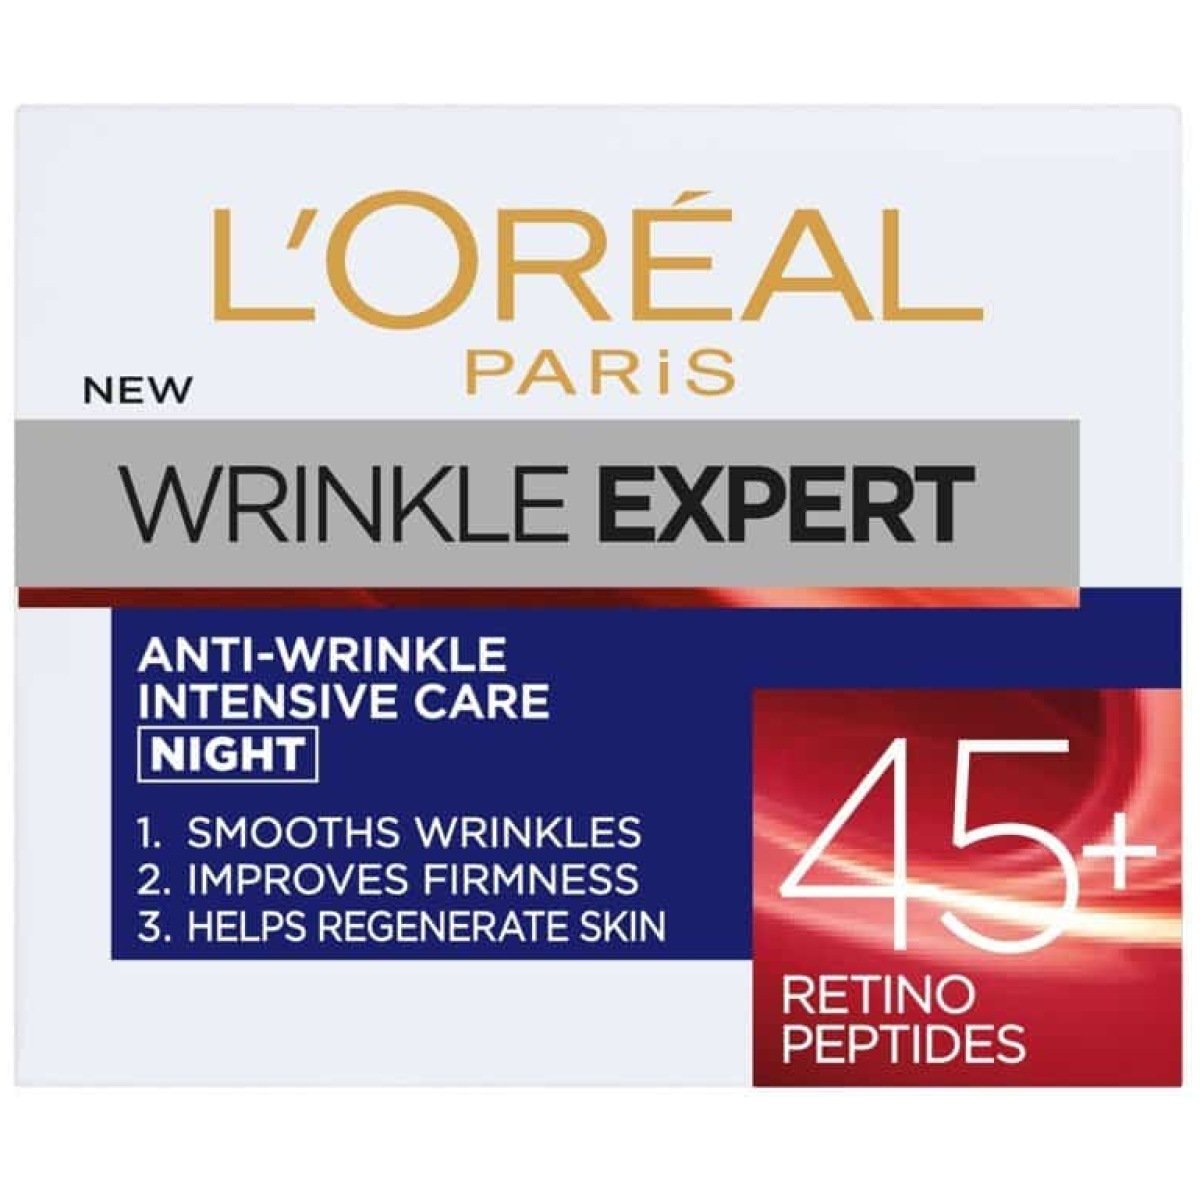 Loreal Wrinkle Expert 45+ Retino Peptides Anti-Wrinkle Intensive Night Cream 50ml